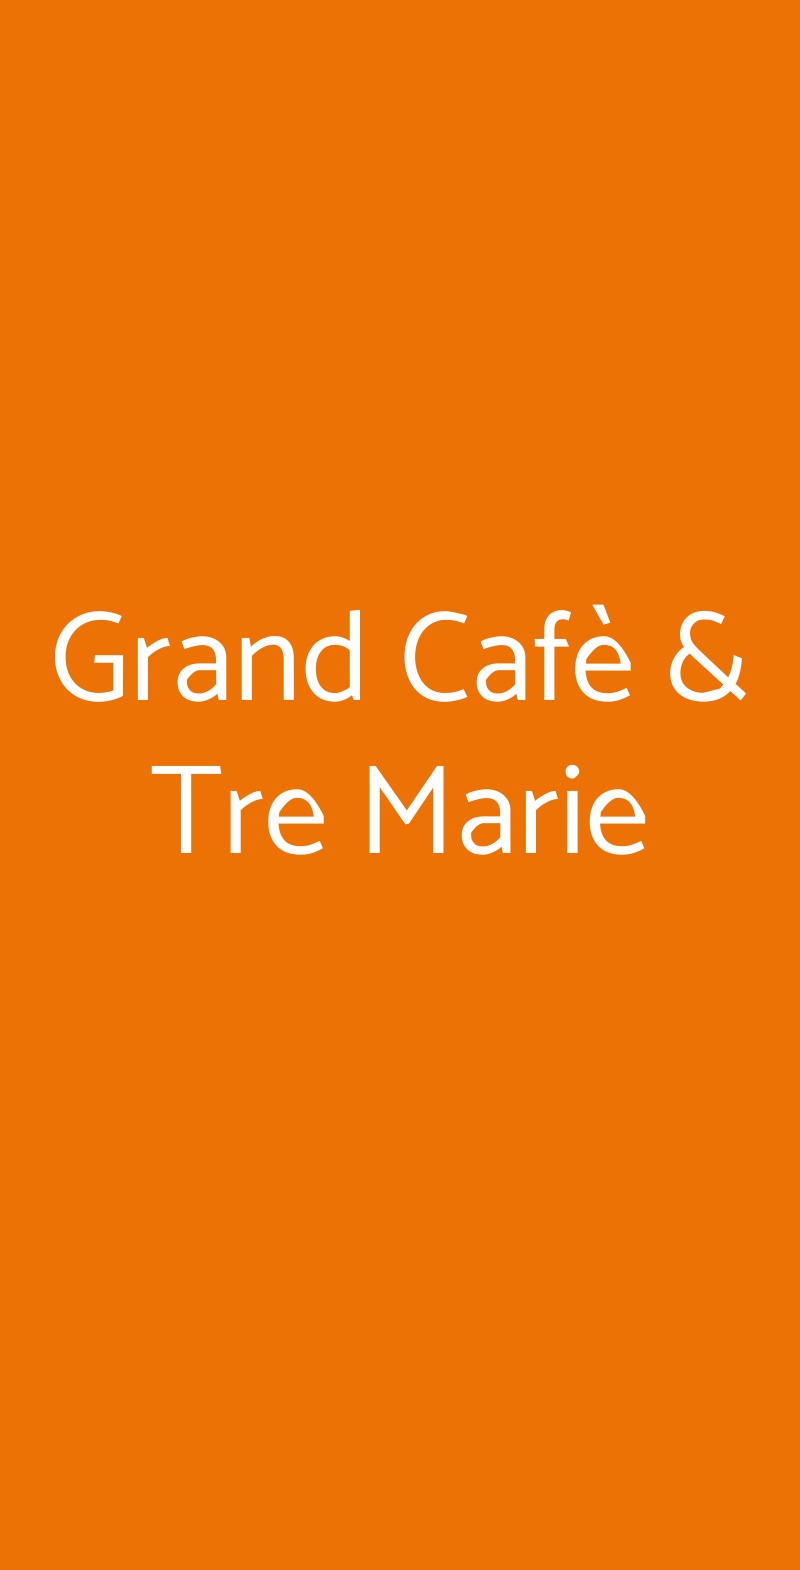 Grand Cafè & Tre Marie Milano menù 1 pagina